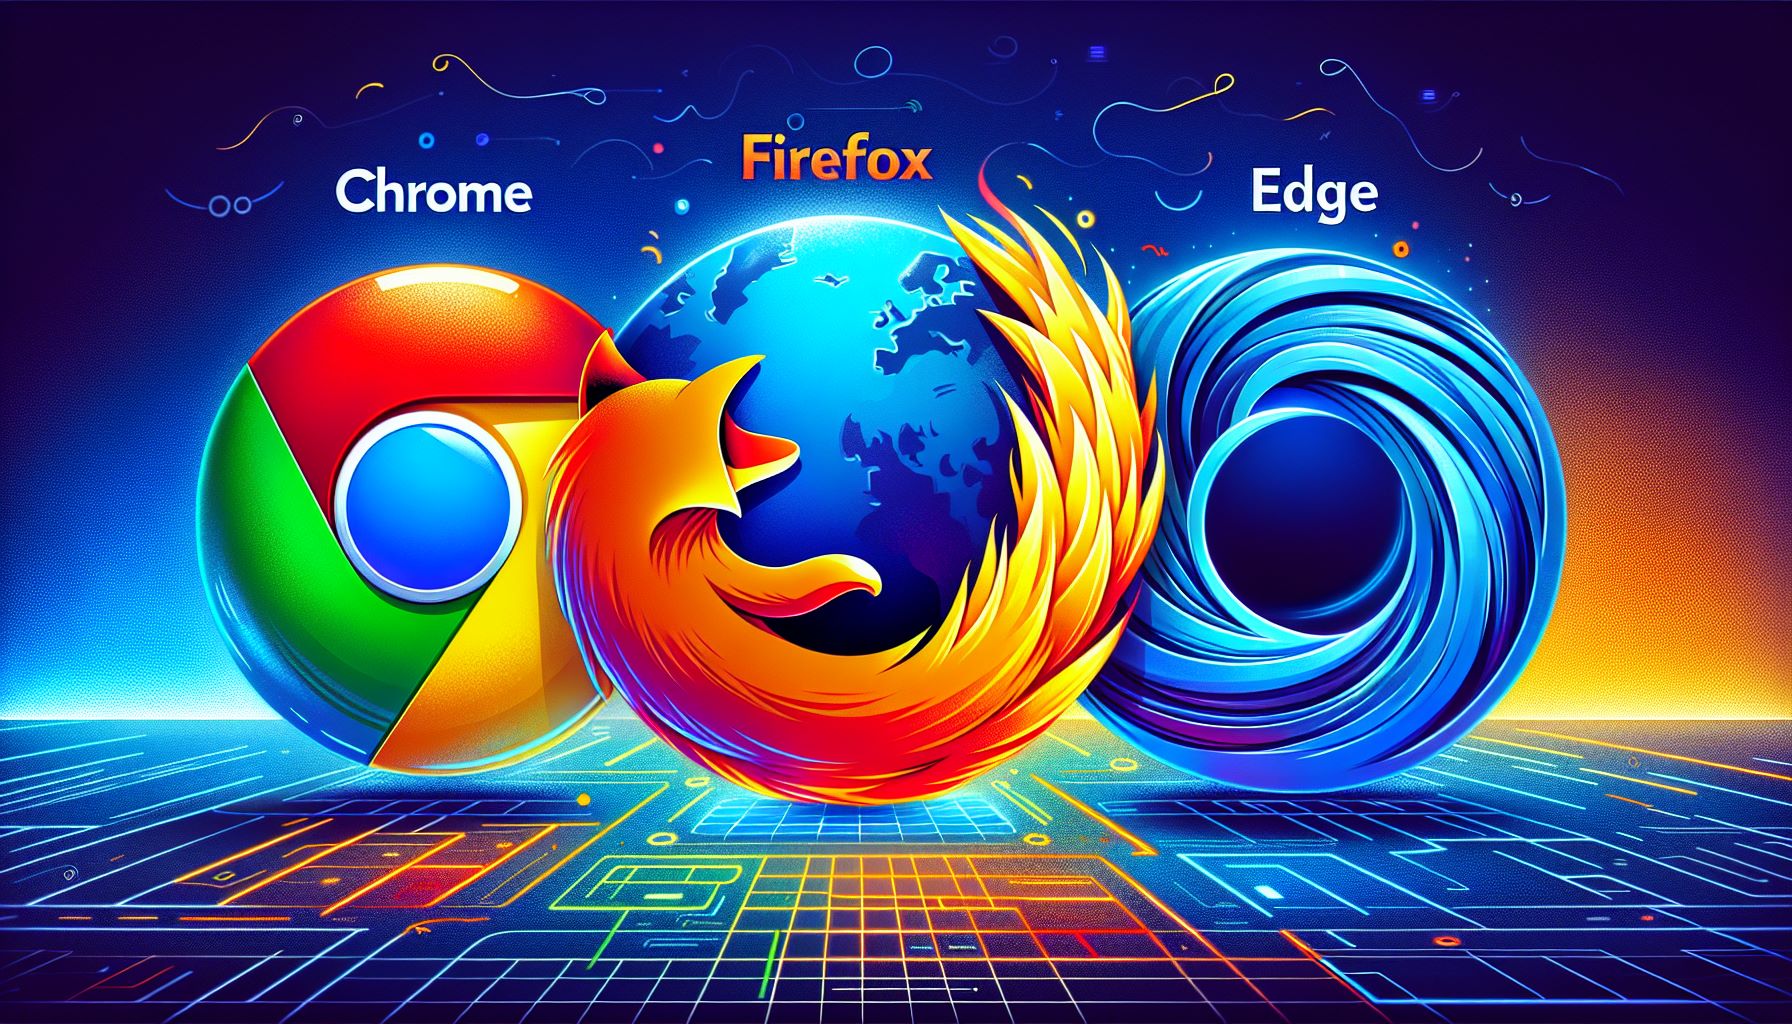 Illustration of Chrome, Firefox, and Edge logos